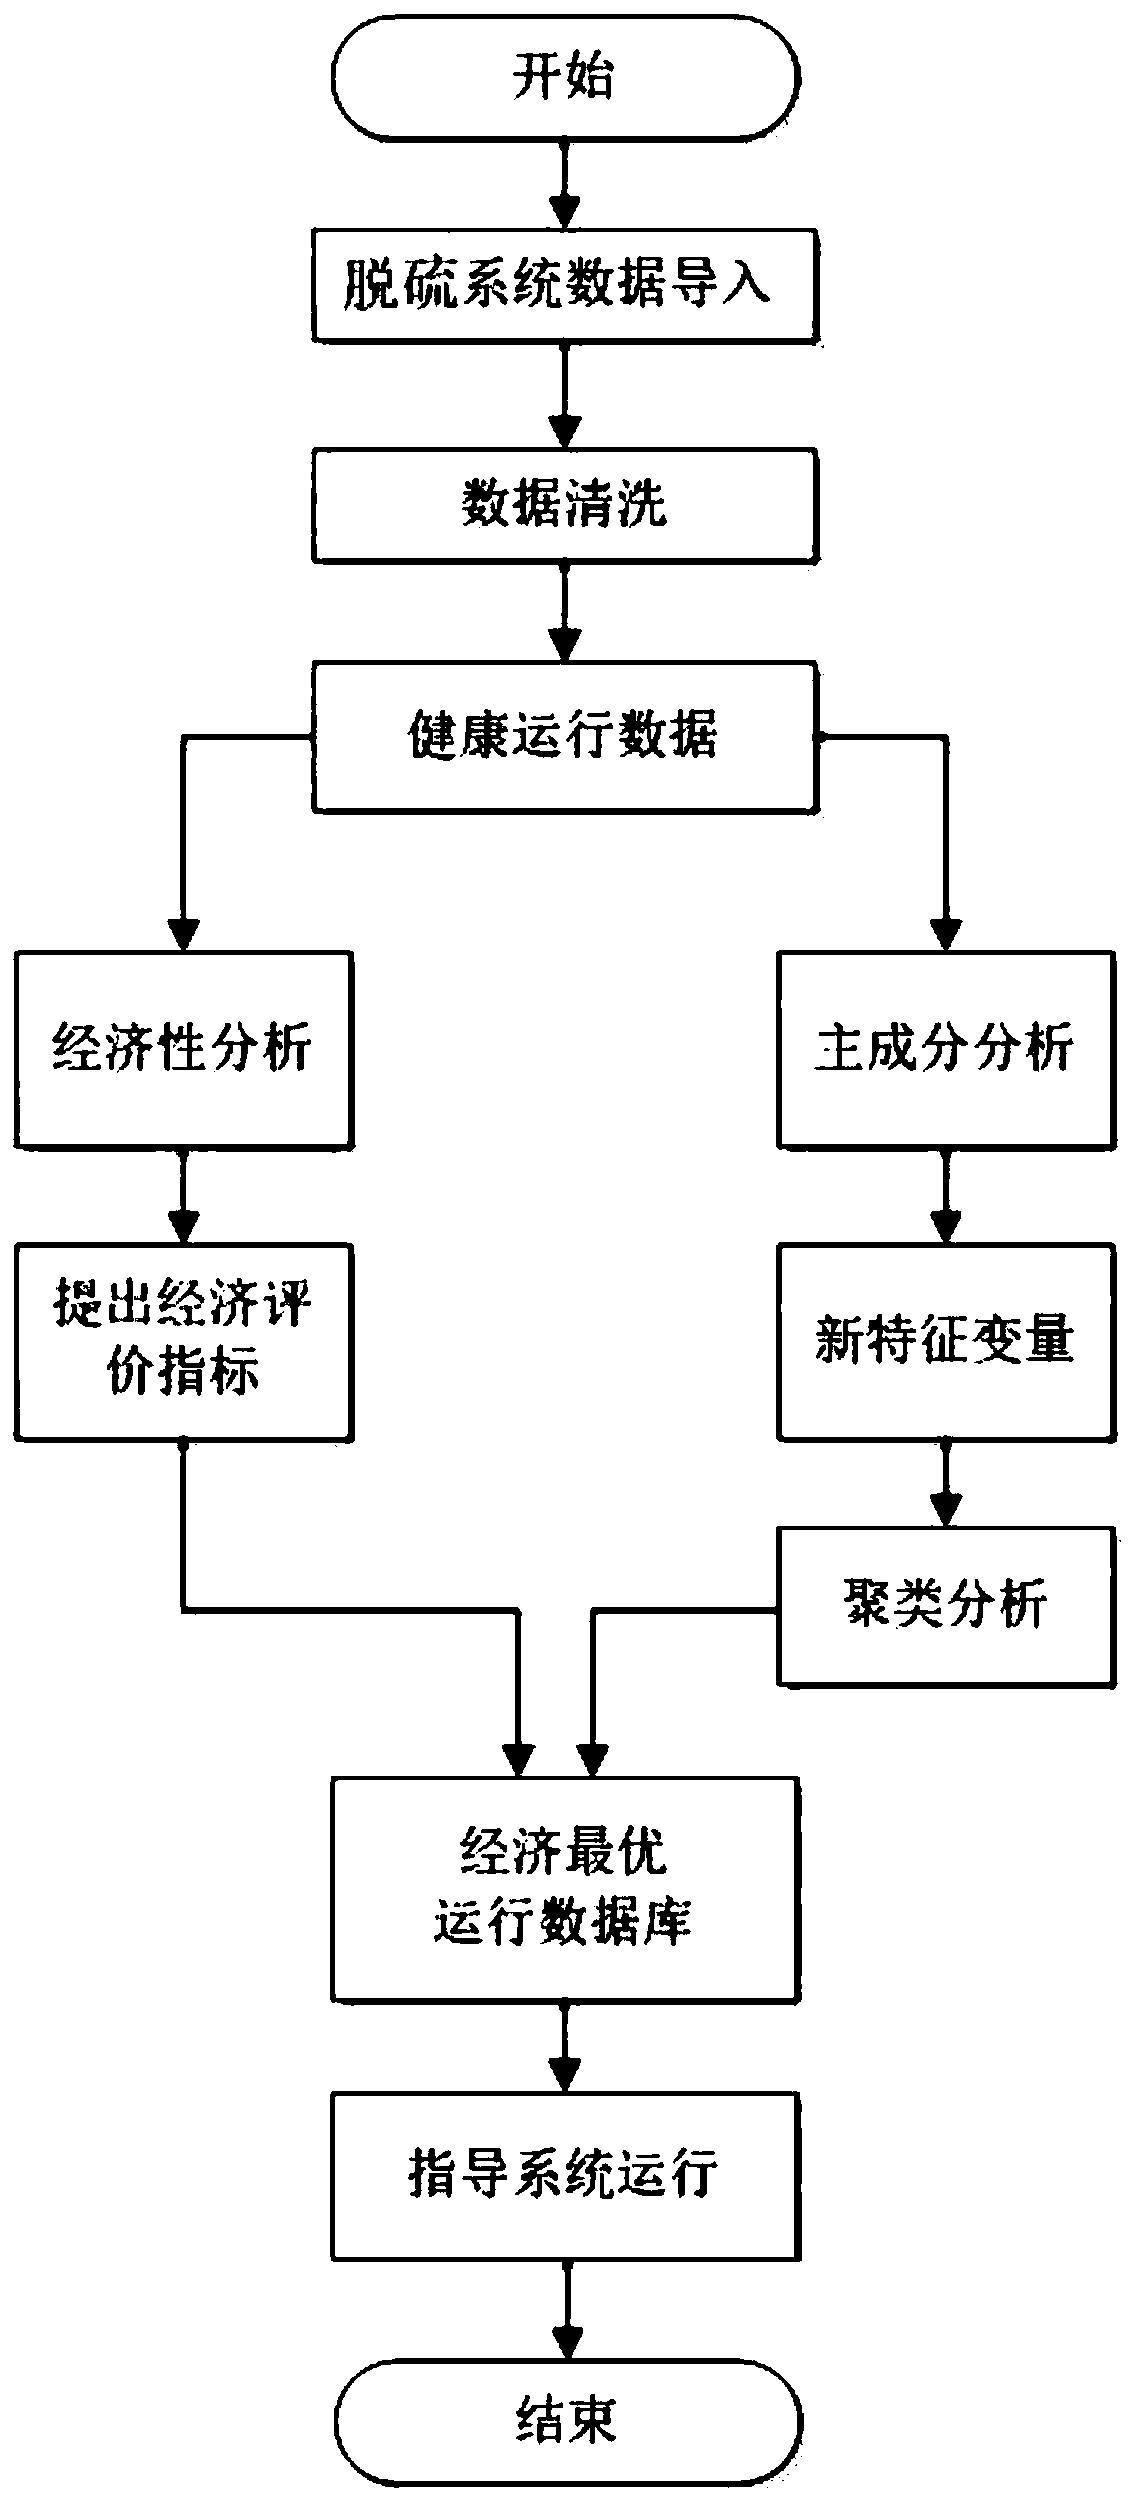 Method for establishing desulfurization system operation condition database